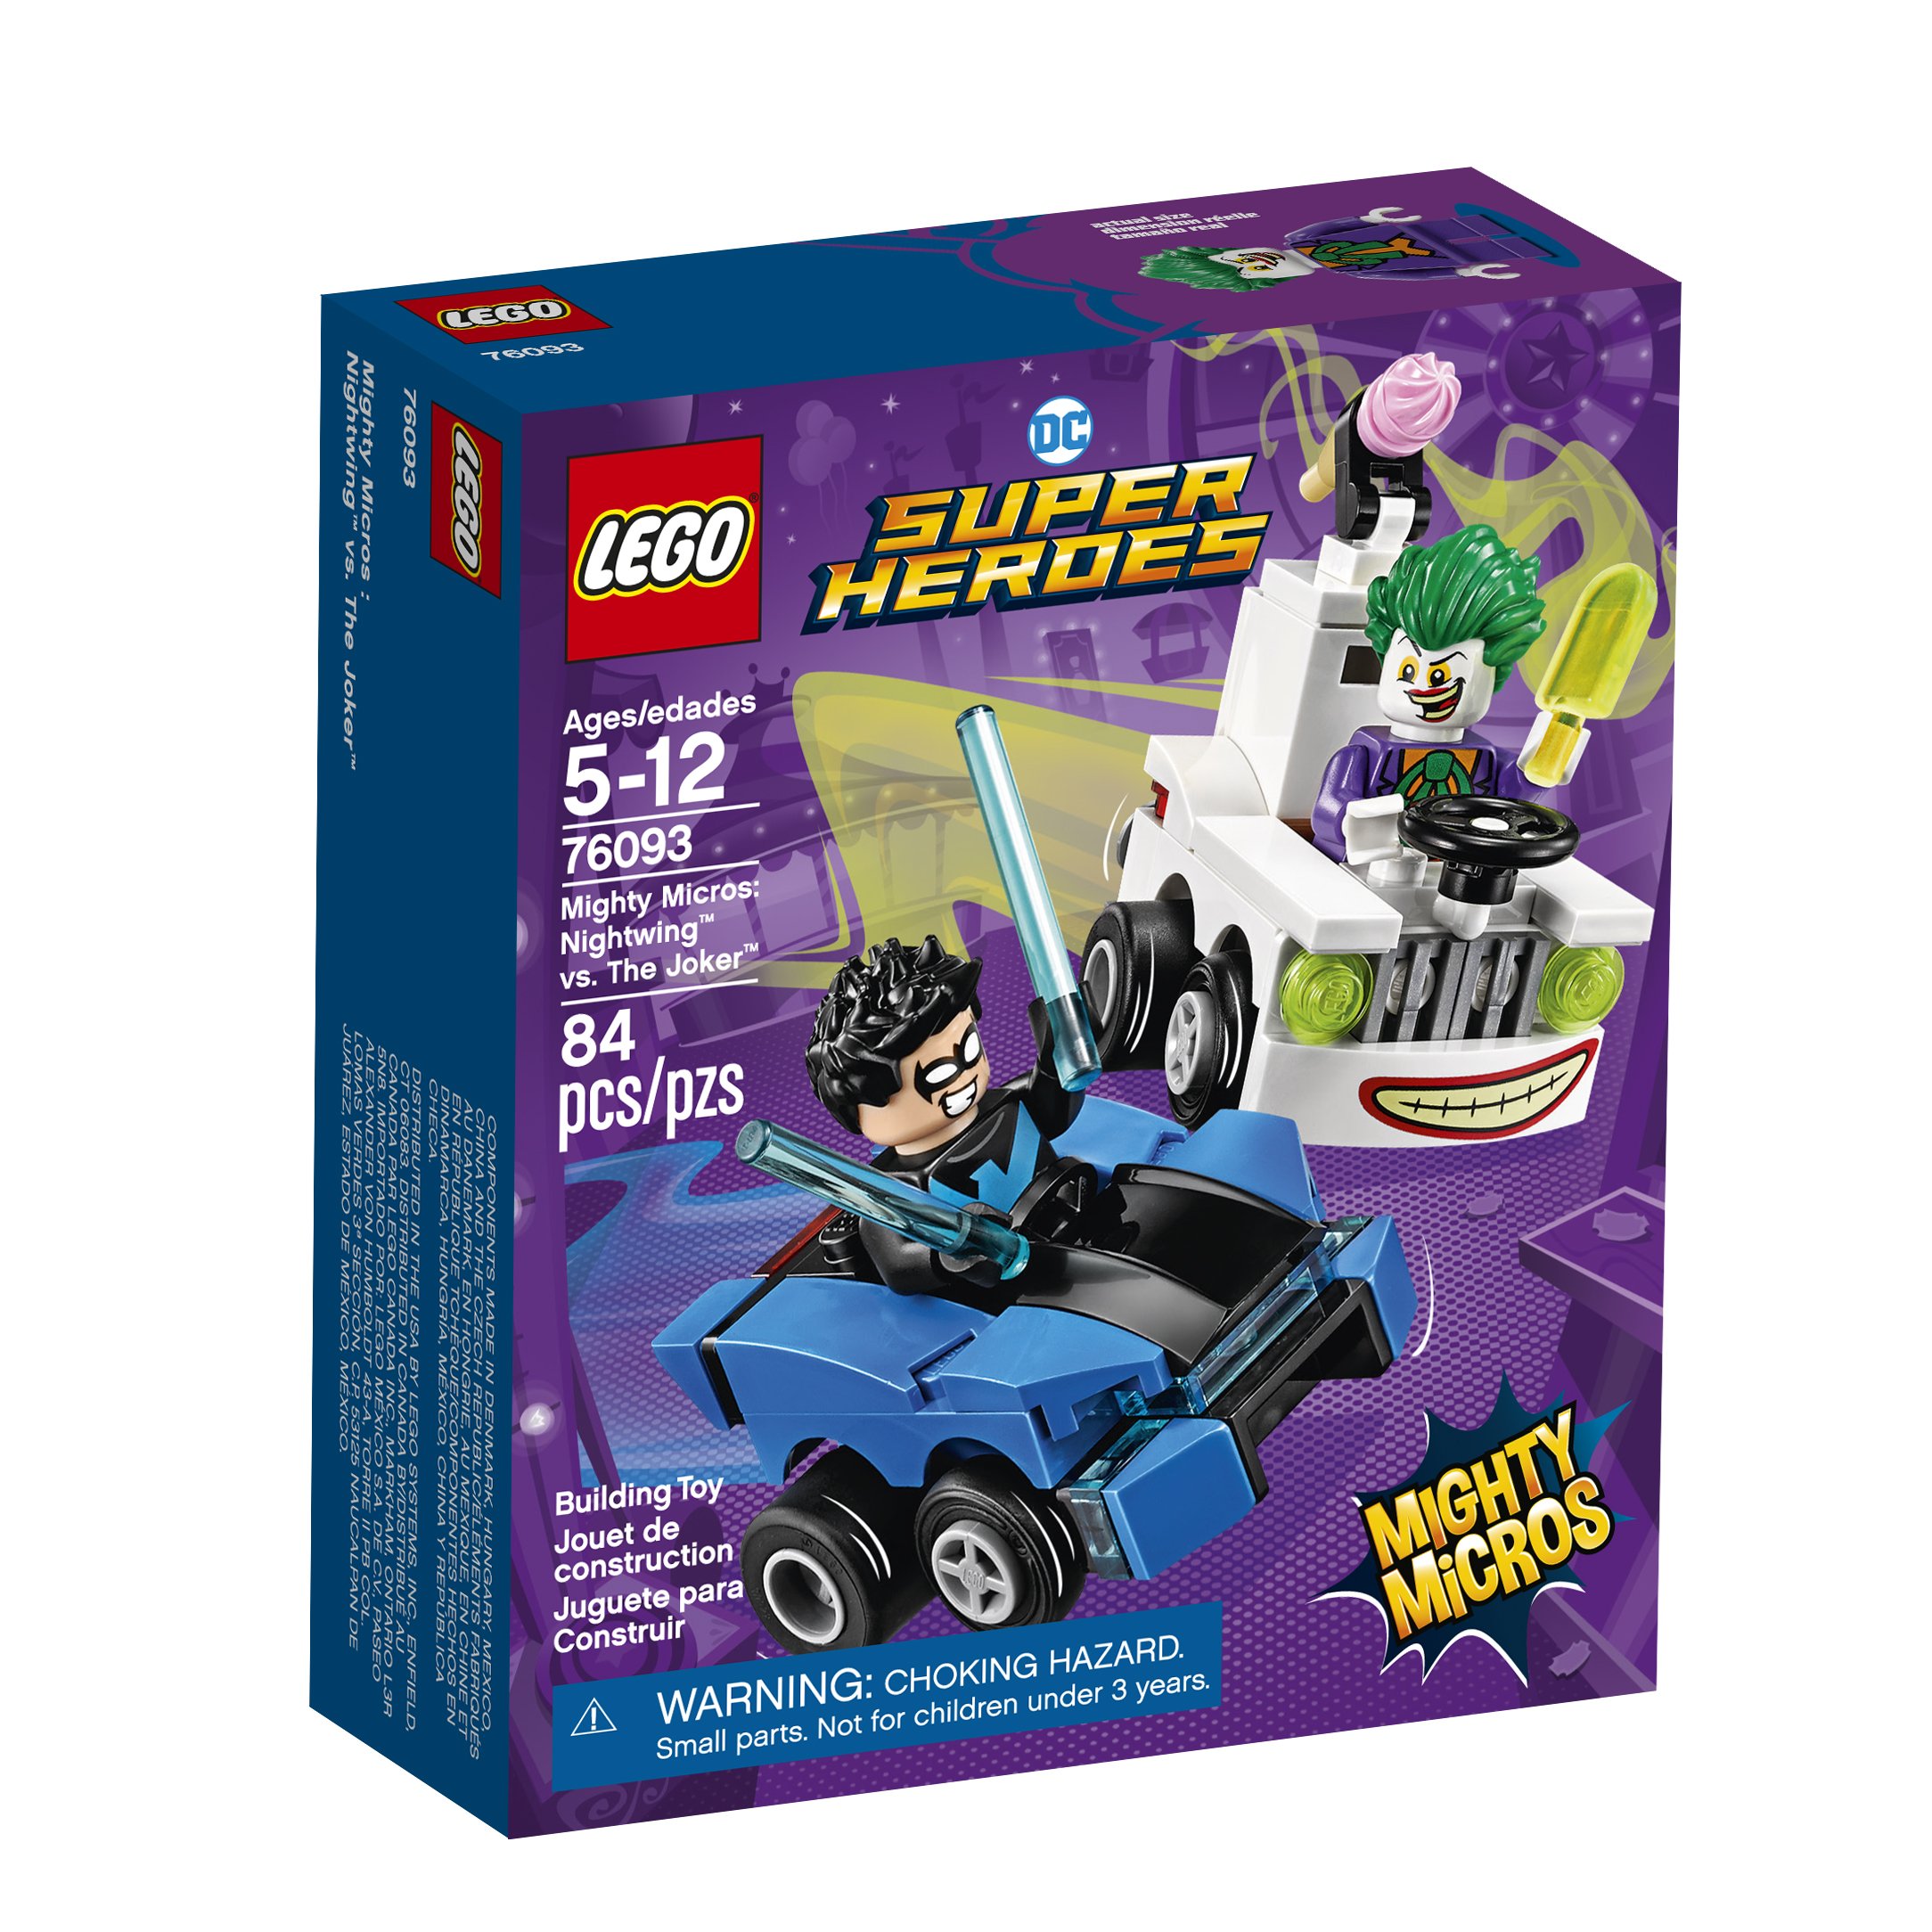 Mighty Micros Nightwing Vs The Joker Lego